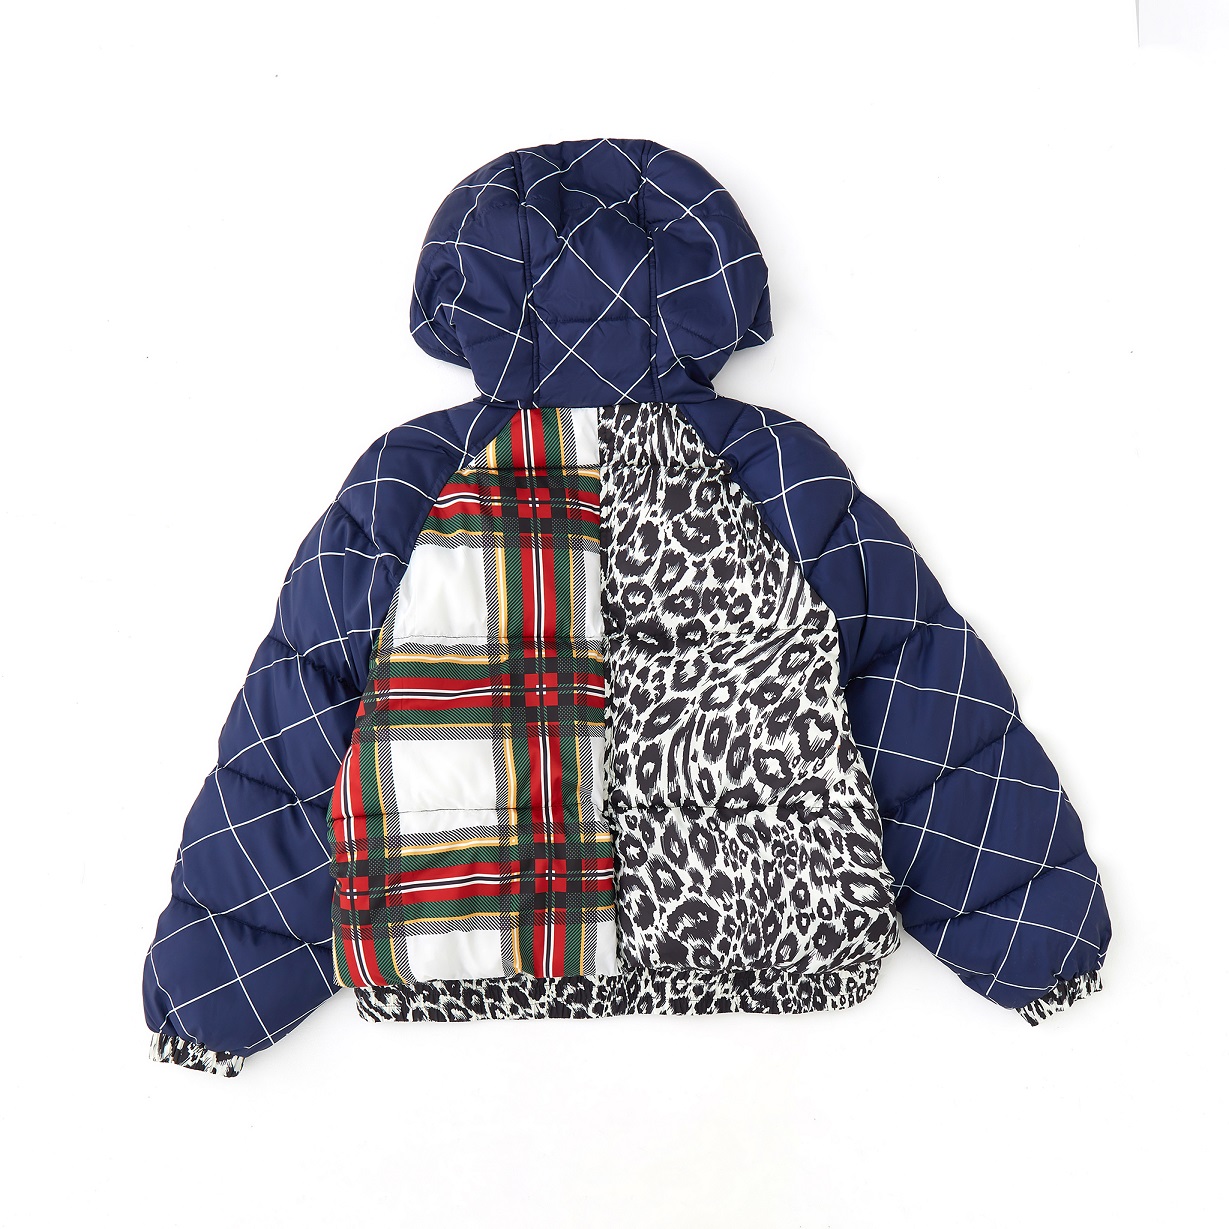 Contrast Printed Women's Winter Warm Hooded Puffer Coat